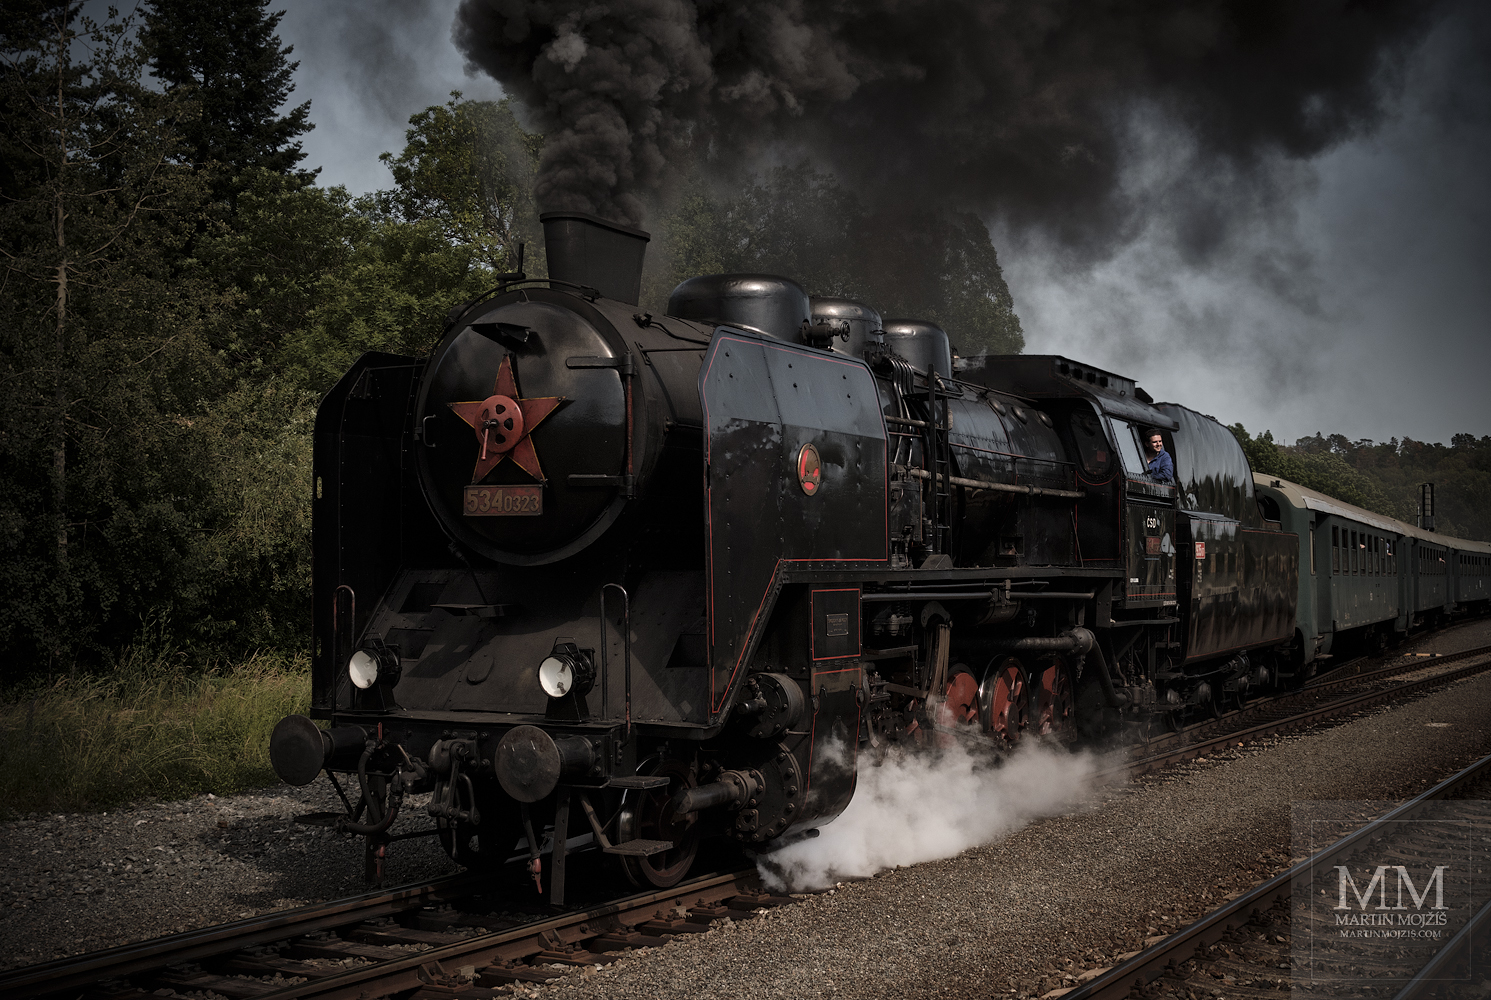 Fine Art photograph of the steam locomotive no. 534 0323 in head of passenger train. Martin Mojzis.